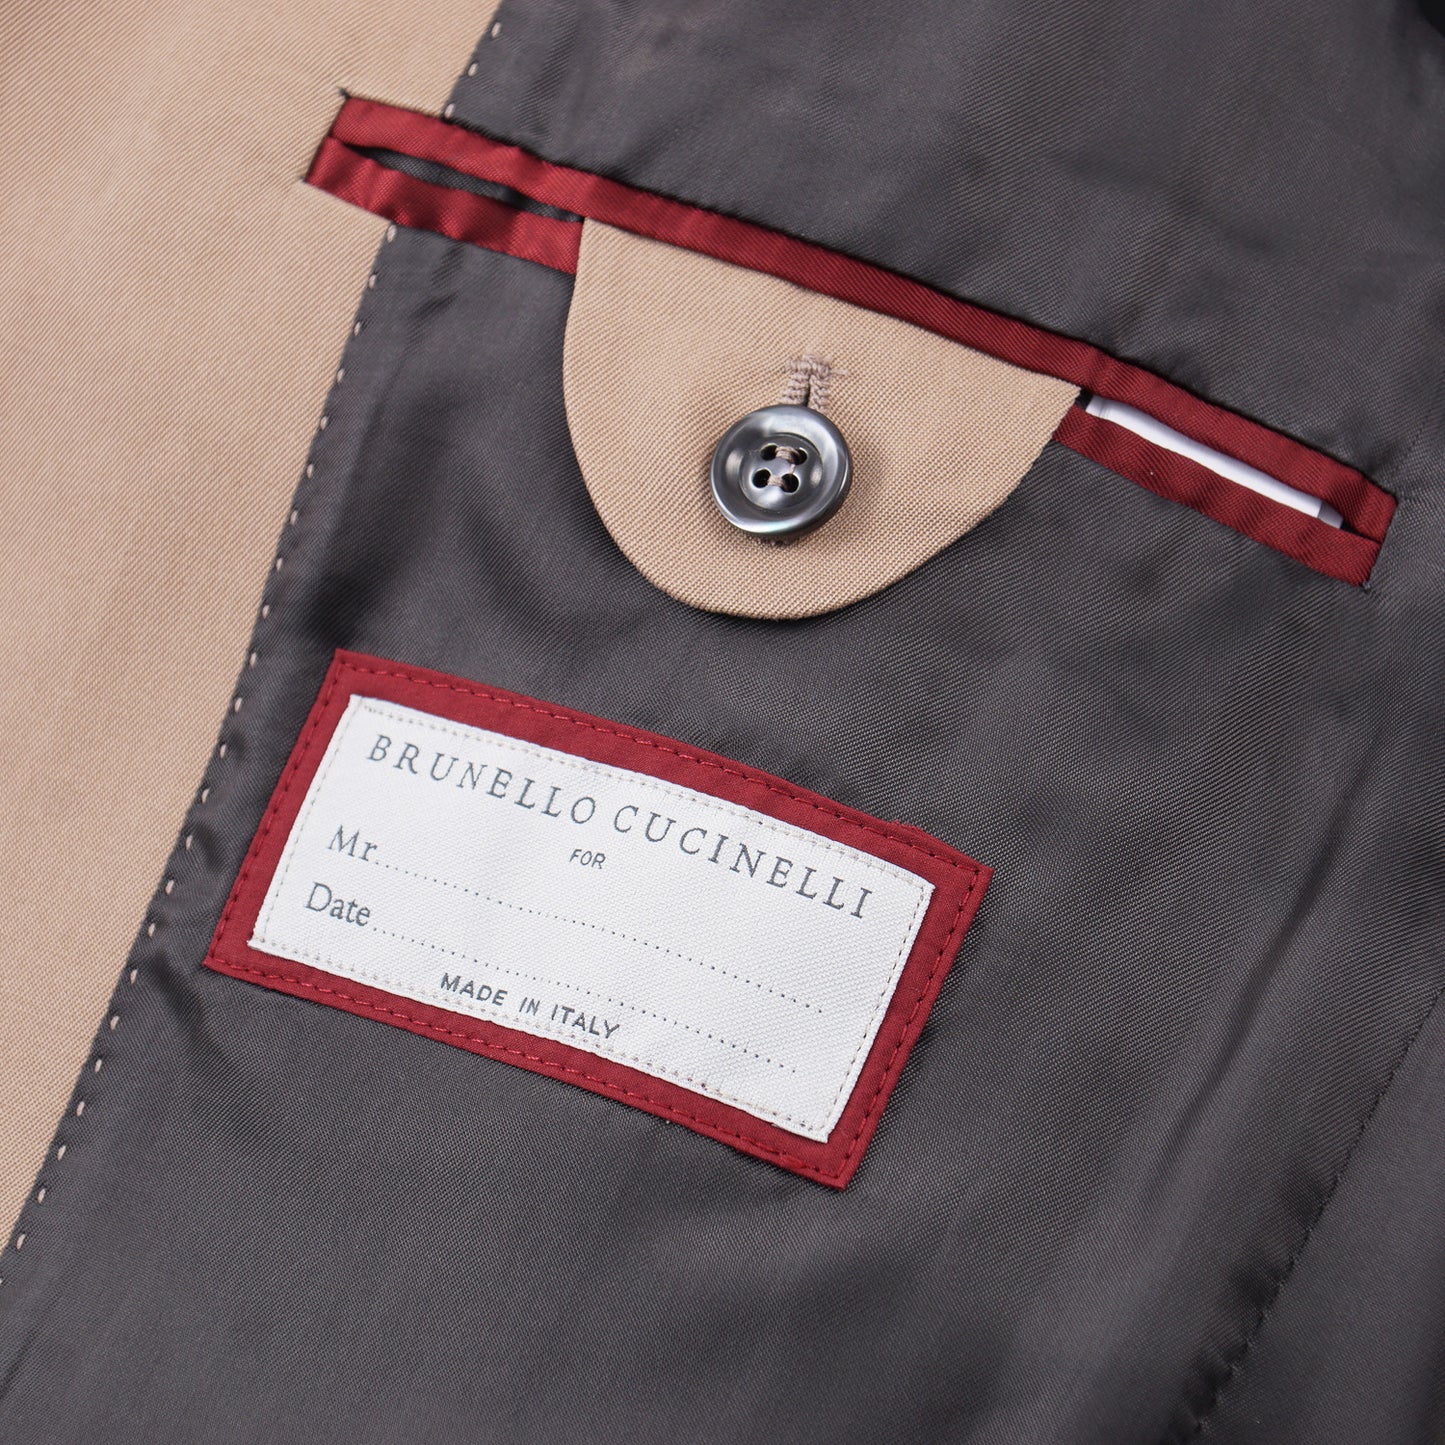 Brunello Cucinelli Shawl Collar Silk Dinner Jacket - Top Shelf Apparel